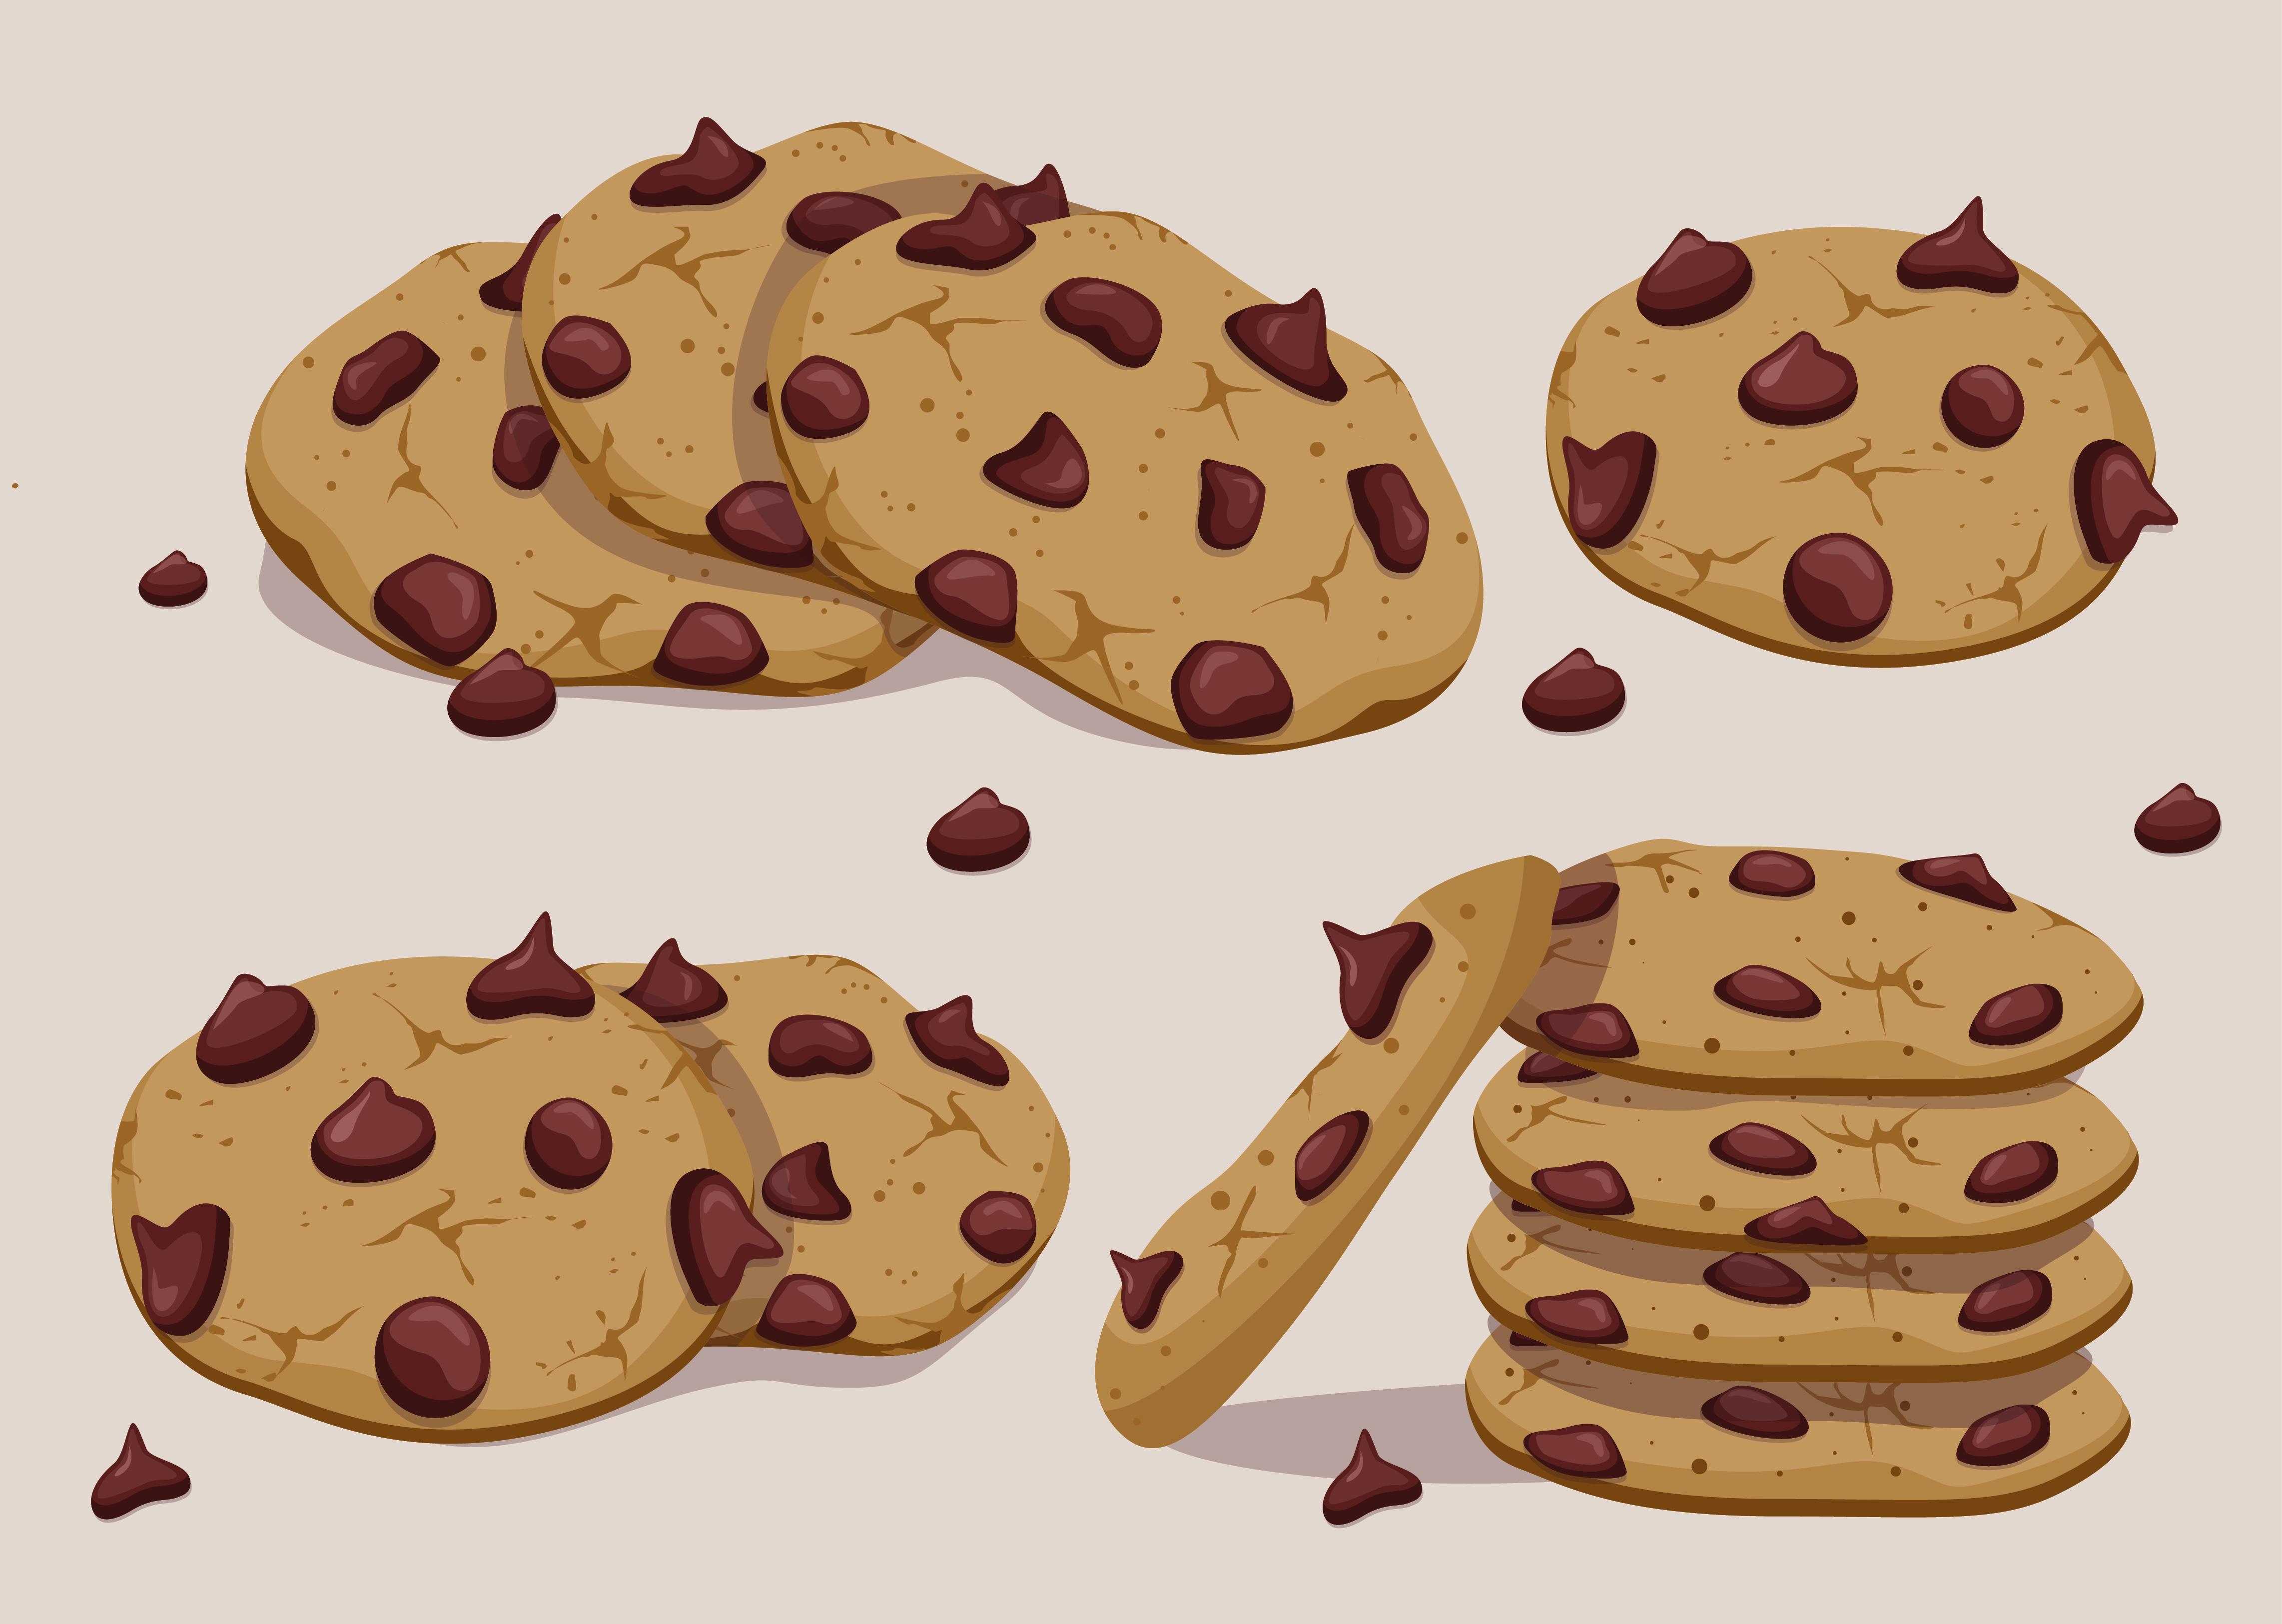 Chocolate Chip Cookies: Free Vector Art by www.Vecteezy.com